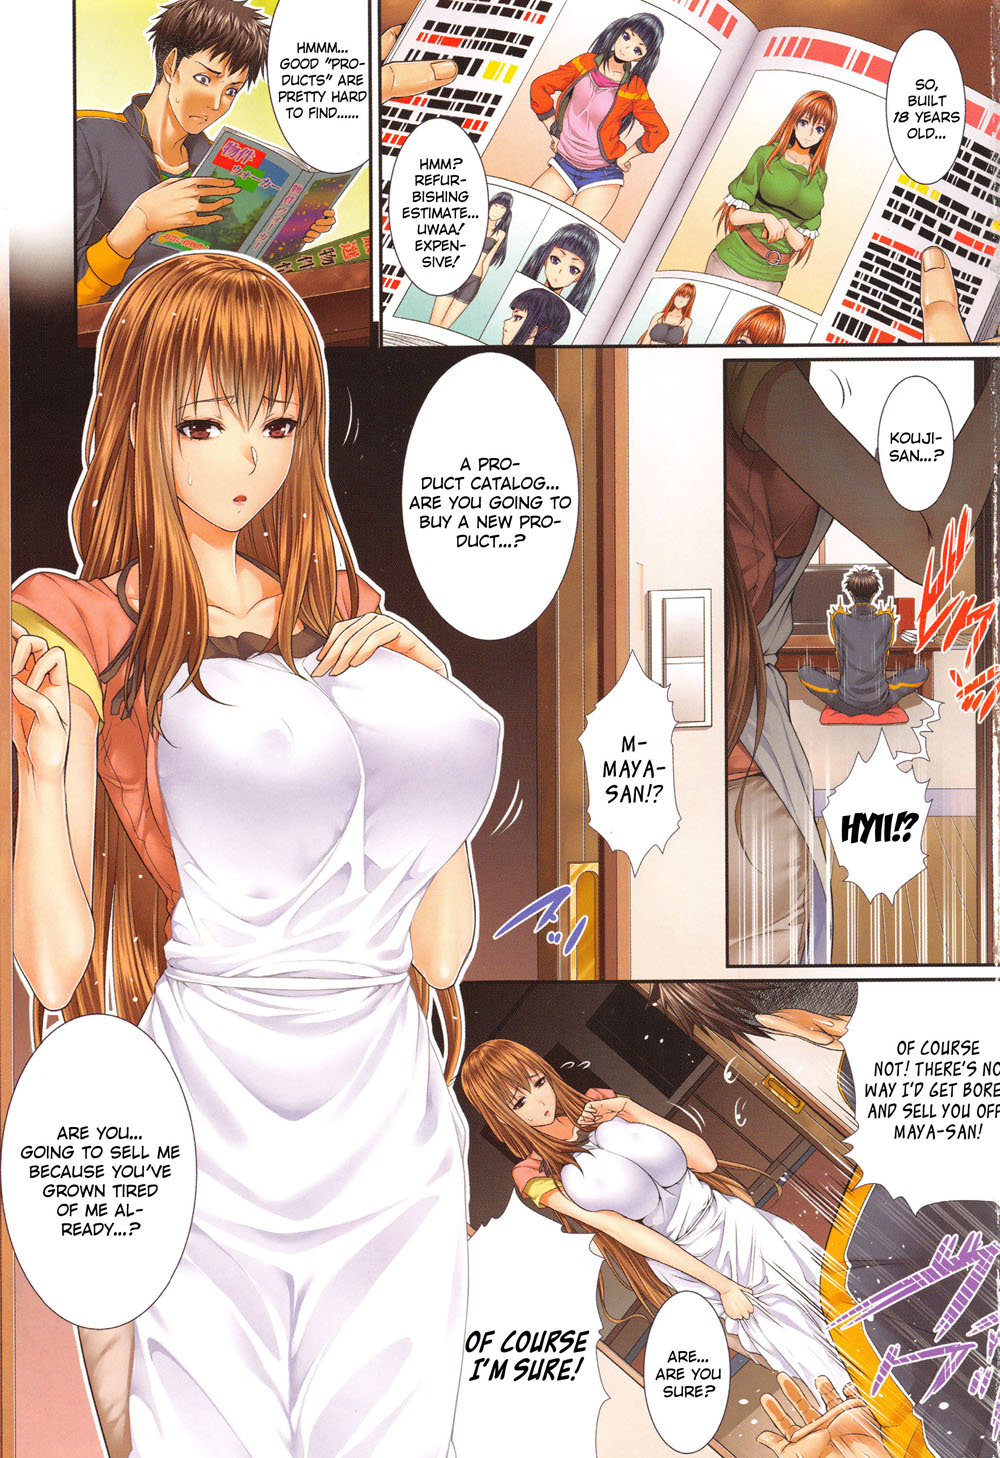 Housewife with amazing big tits impregnated by her young master in Zucchini Shinchiku Bukken Hen Hentai Comics